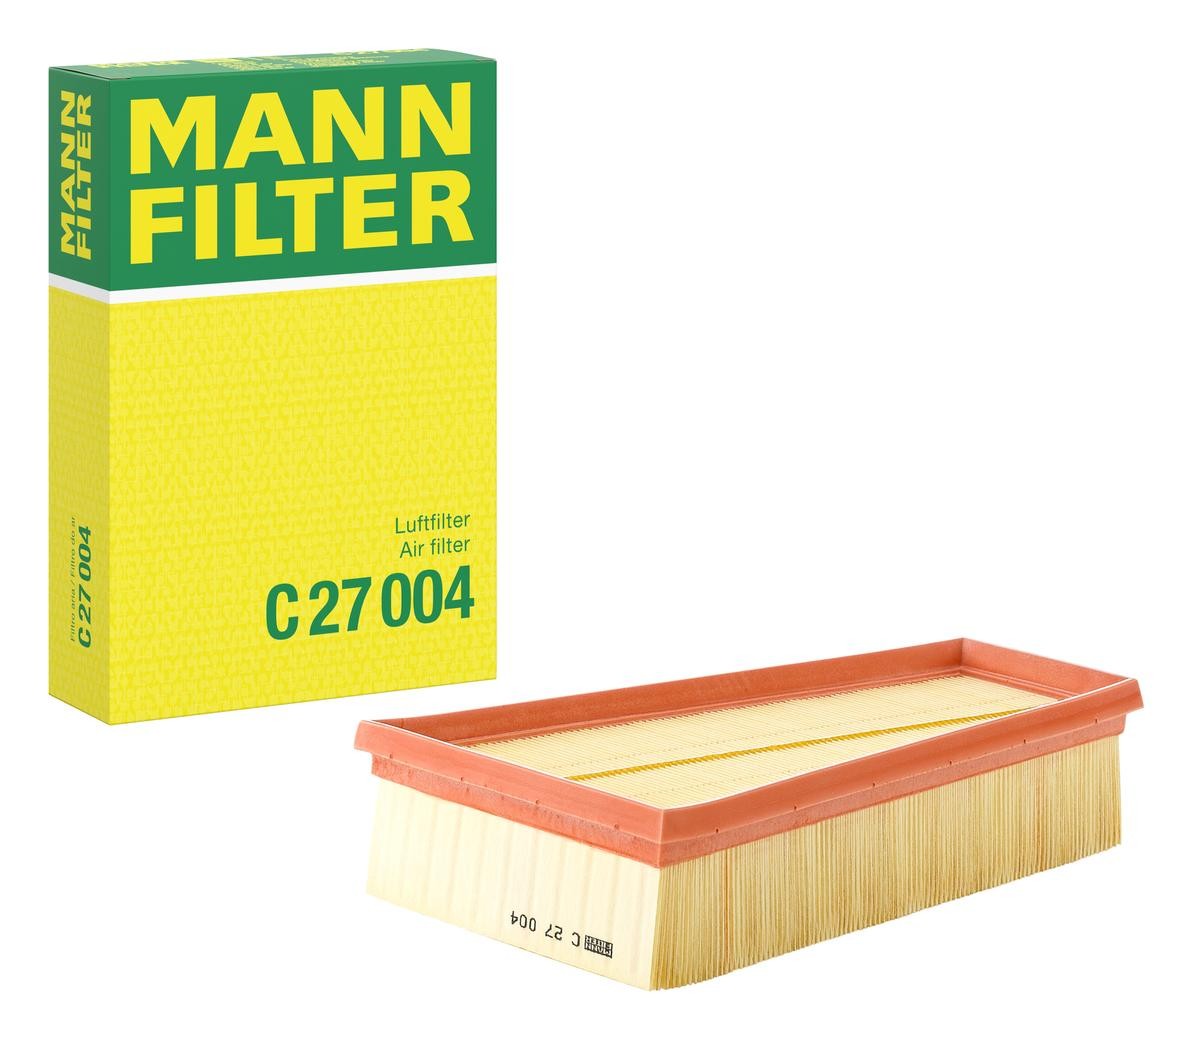 C27004 Air filter C 27 004 MANN-FILTER 58mm, 177mm, 262mm, Filter Insert